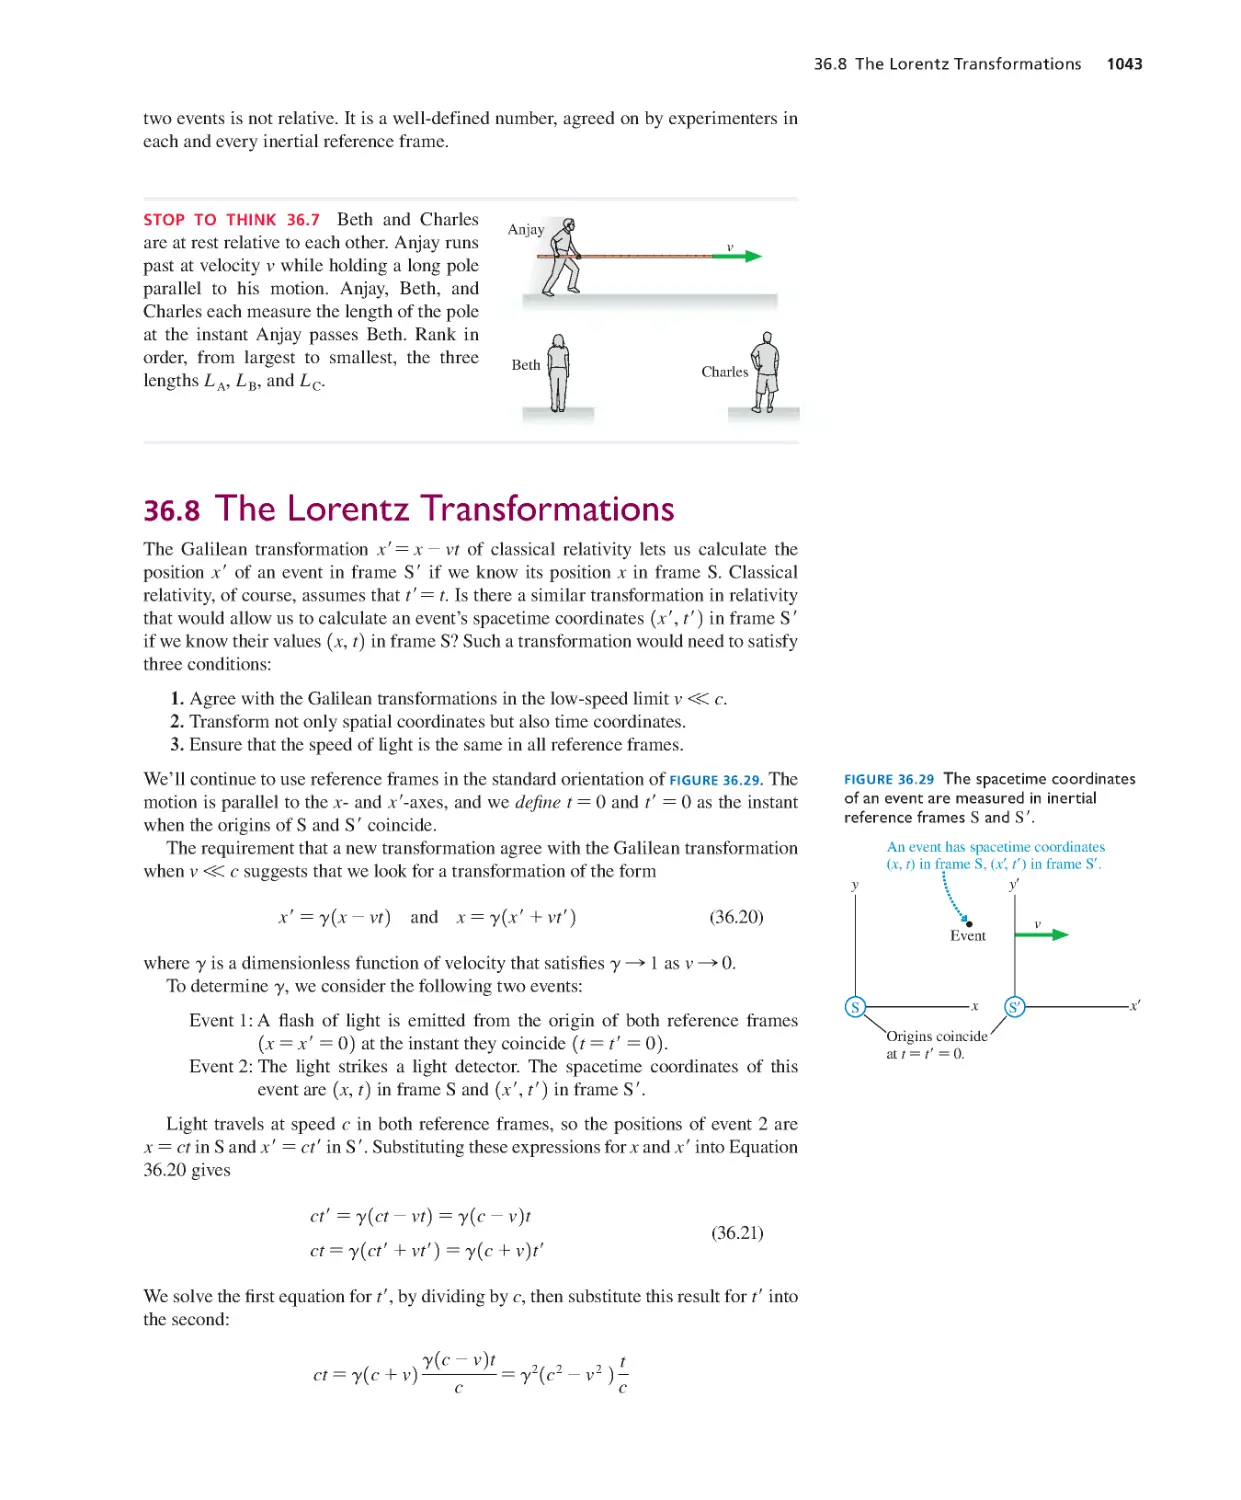 36.8. The Lorentz Transformations